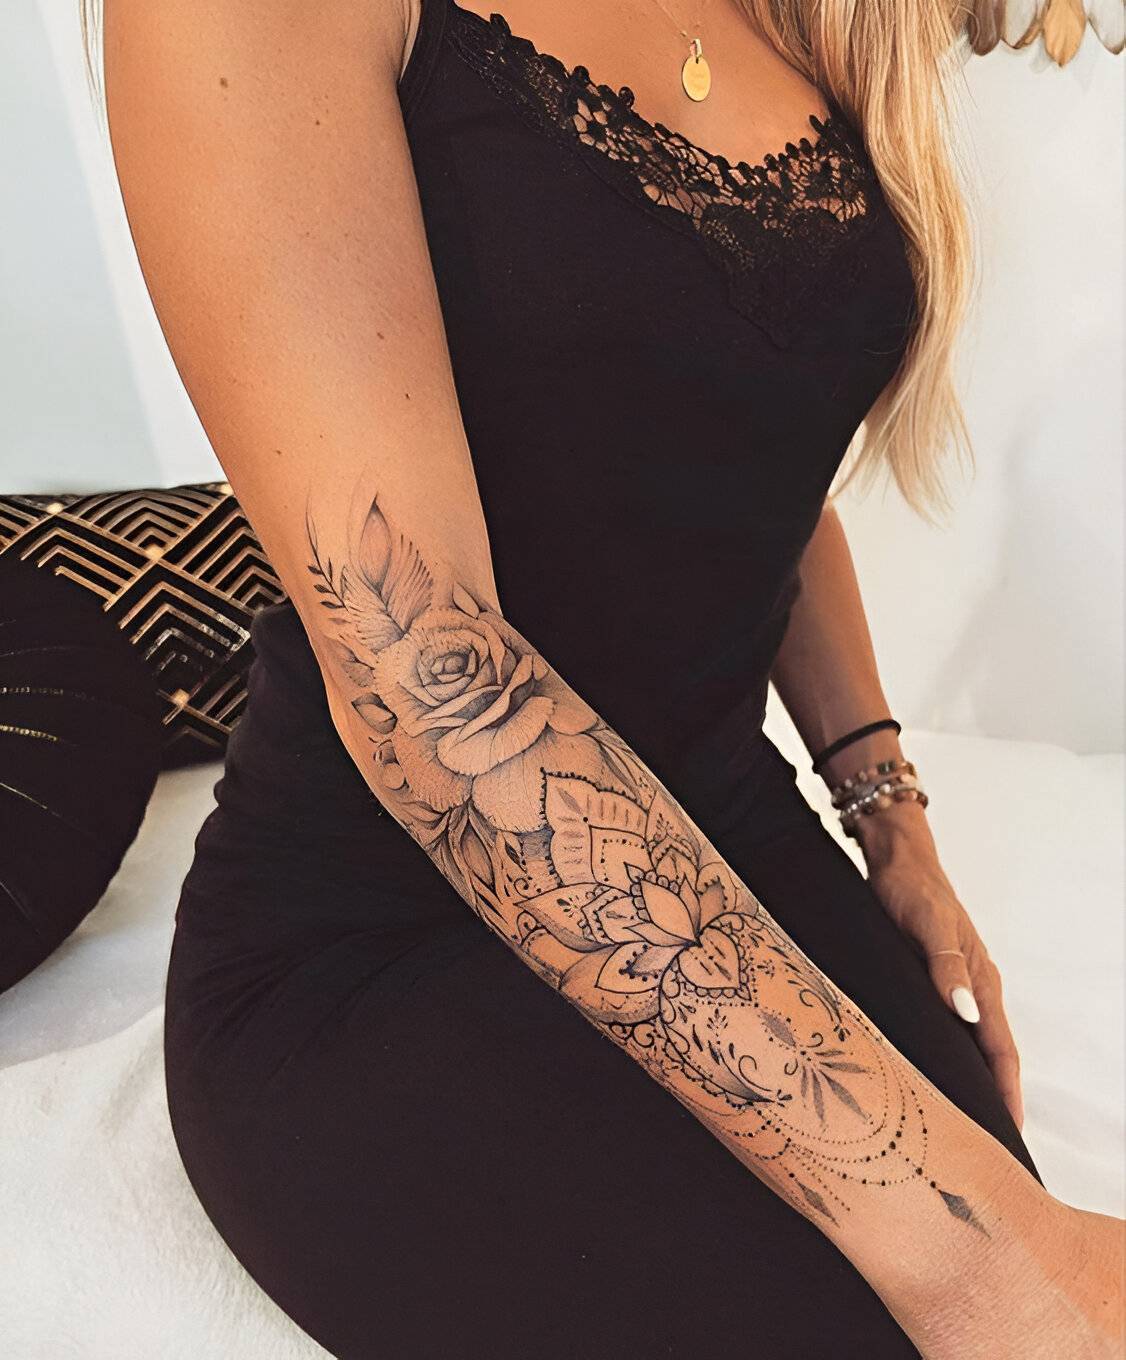 27 Stunning Forearm Tattoos To Vamp Up Your Femininity 22